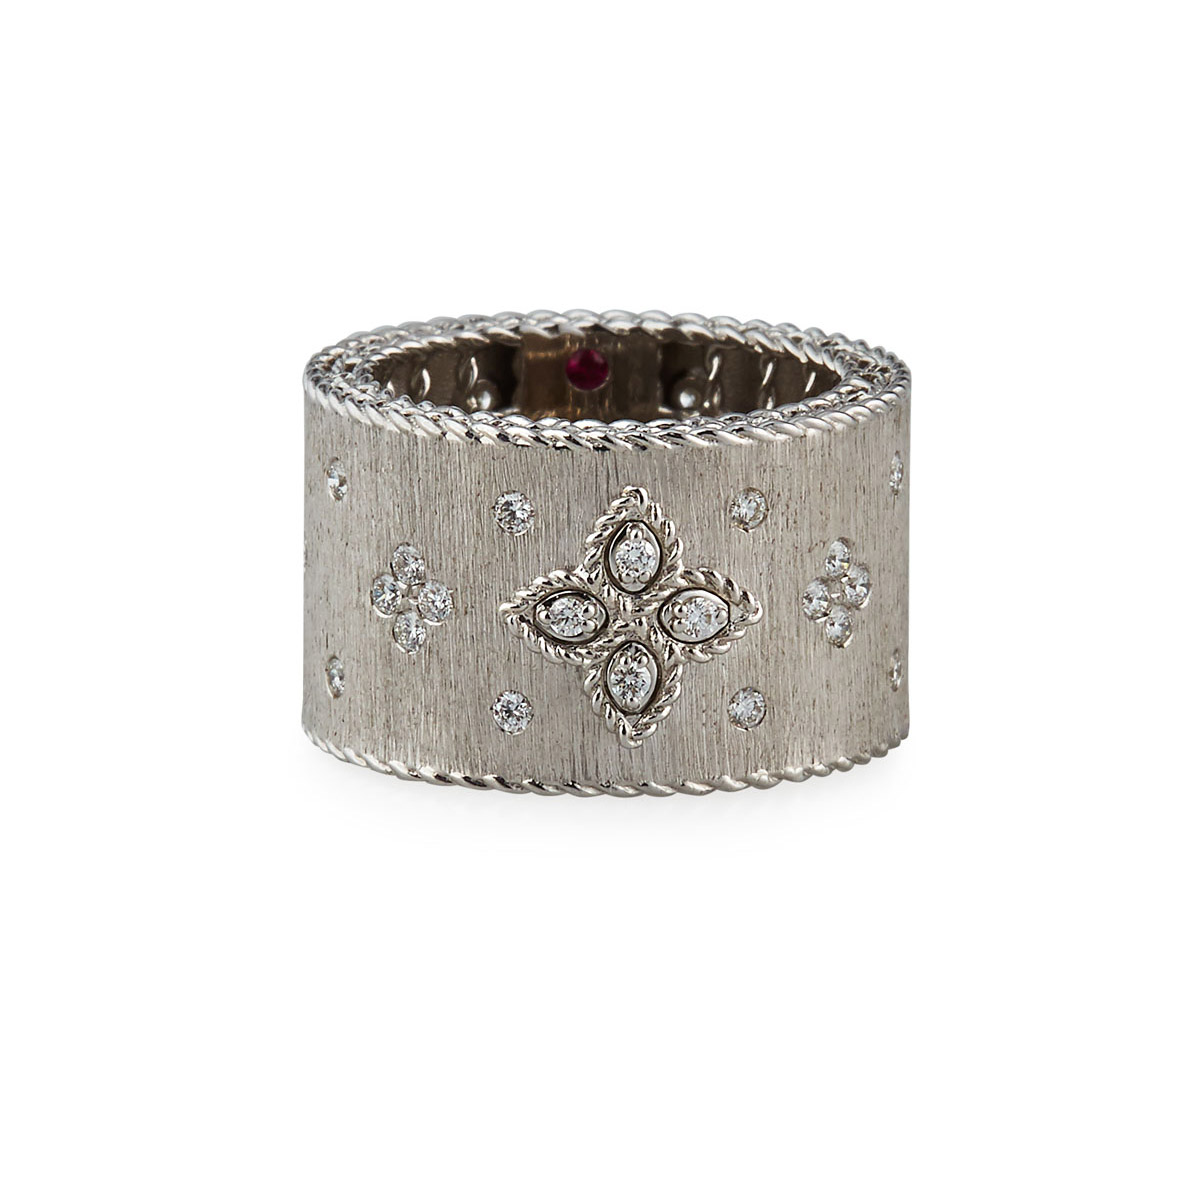 Wholesale Custom OEM/ODM Jewelry 18k White Gold,silver & Diamond Ring jewelry design OEM manufacturer